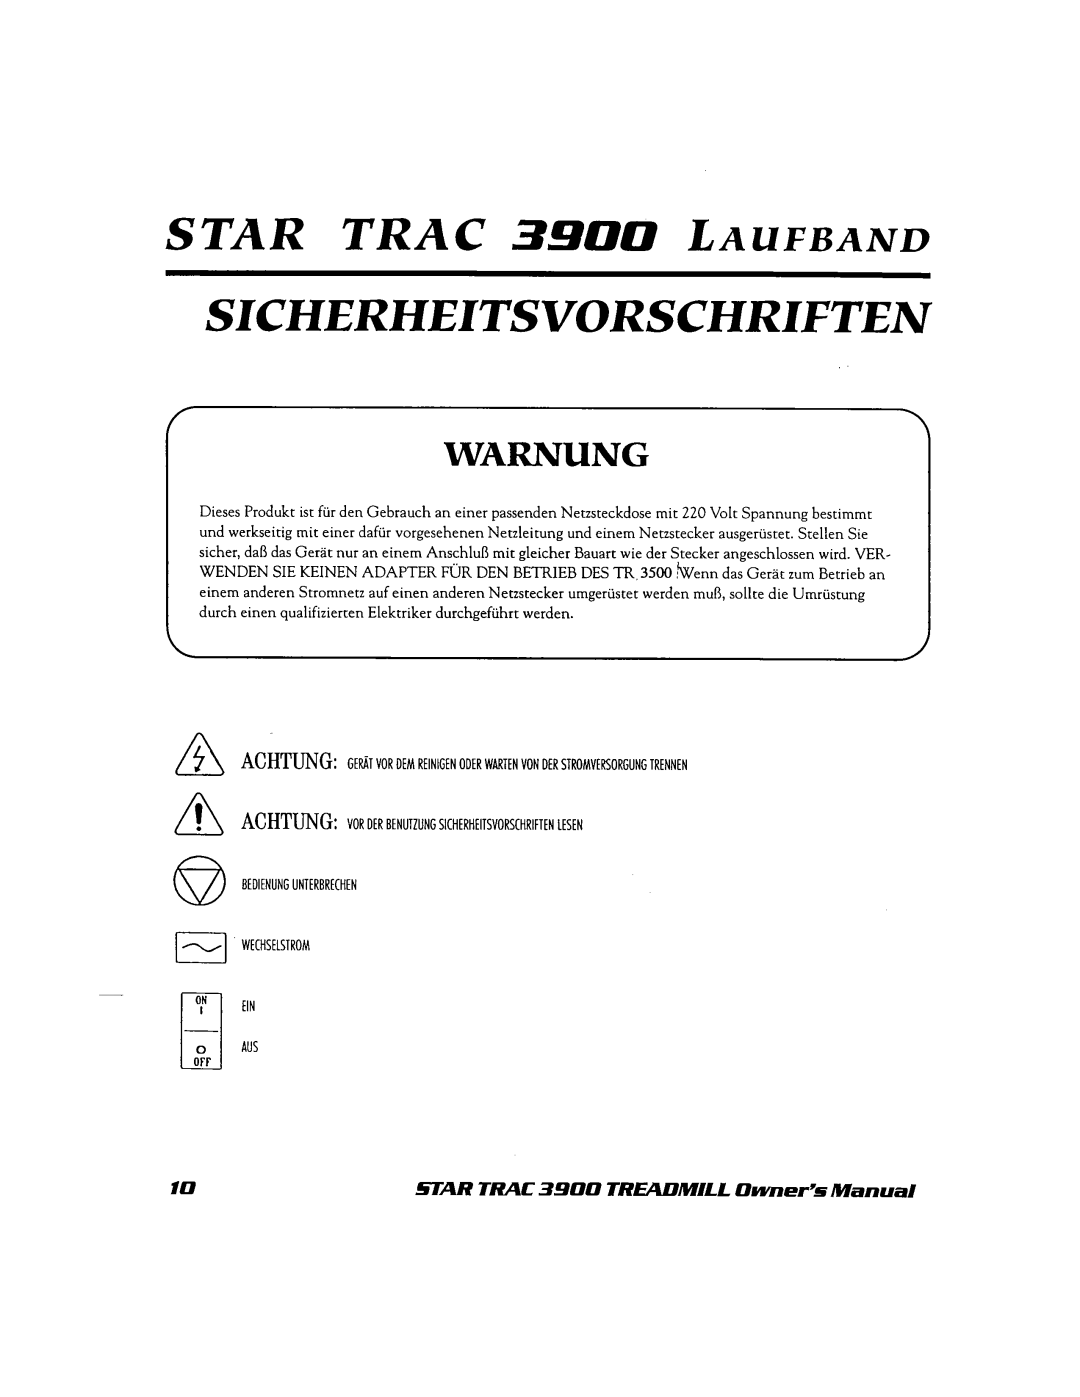 Star Trac 3900 manual 